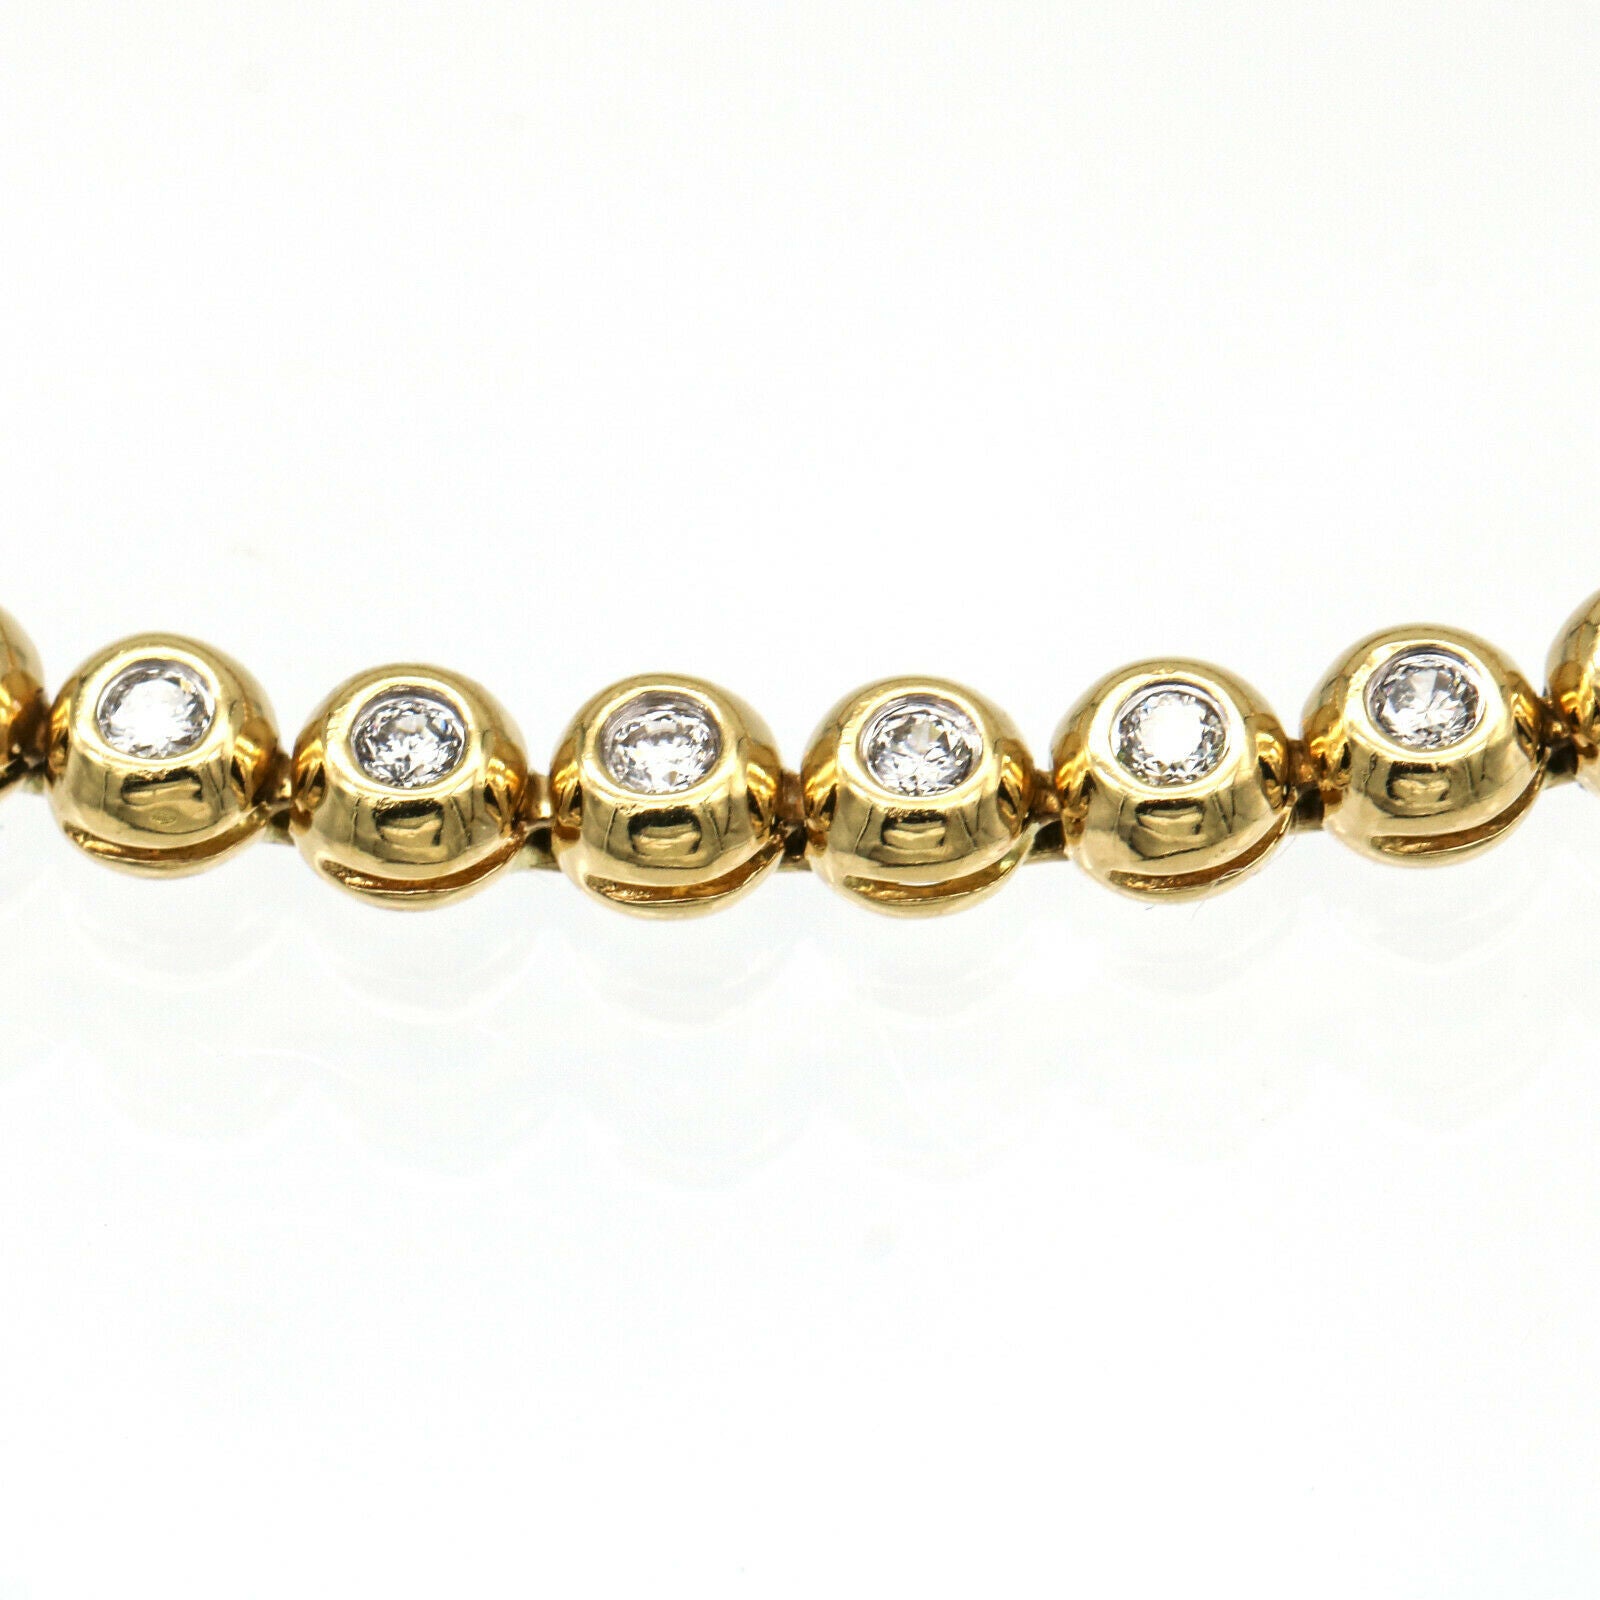 1.50 ct Bezel Set Diamond Tennis Bracelet in 18k Yellow Gold